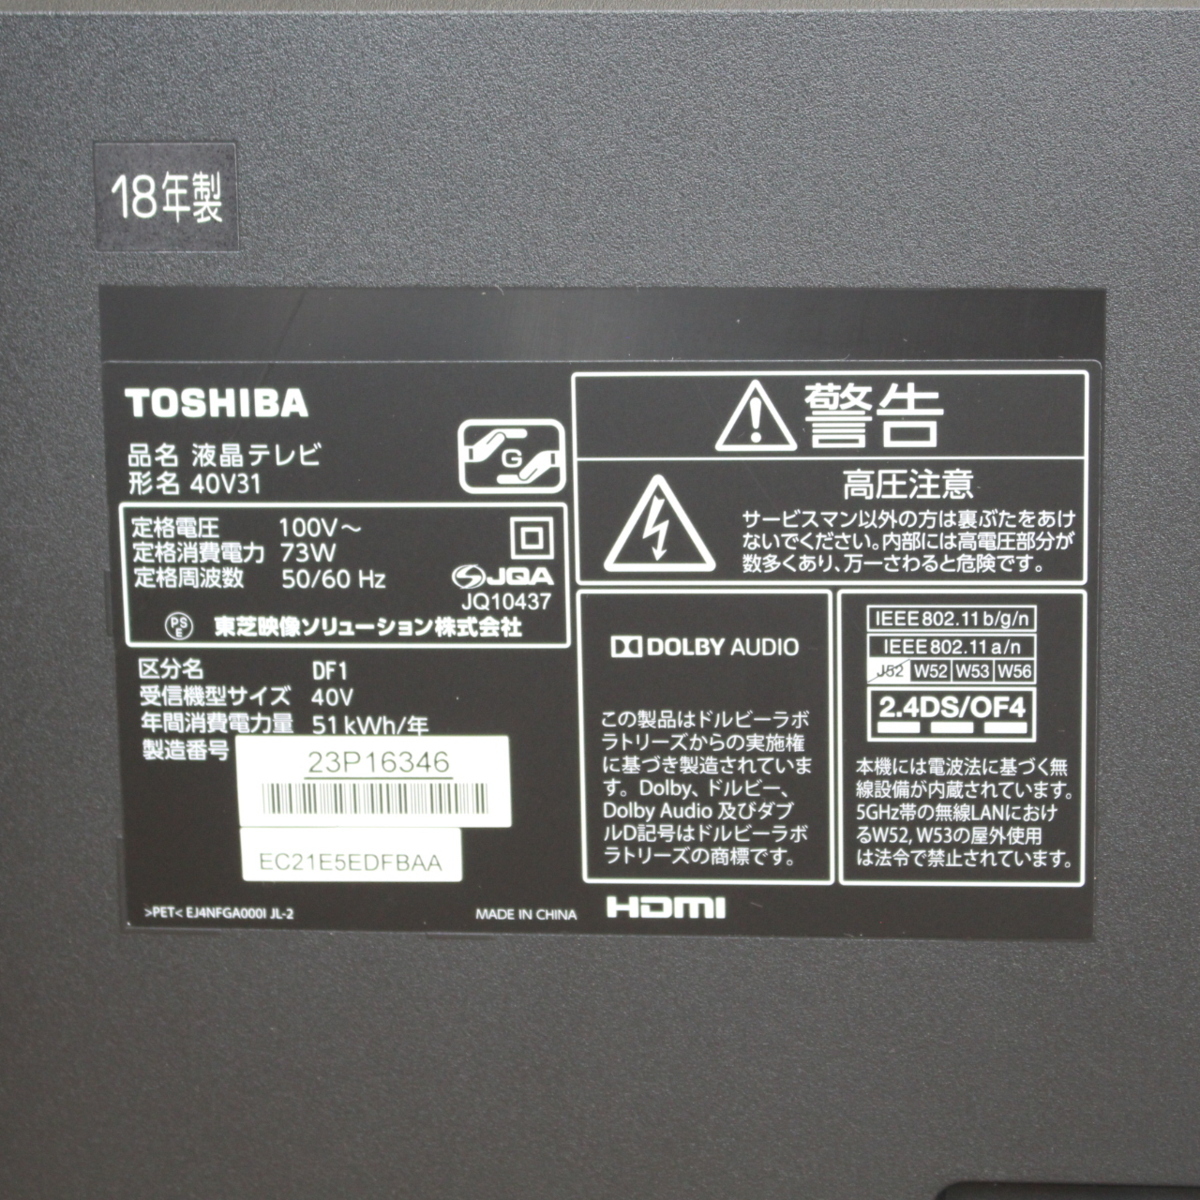 TOSHIBA REGZA 東芝 レグザ 40V31 40型 液晶テレビ - 川崎市・横浜市で